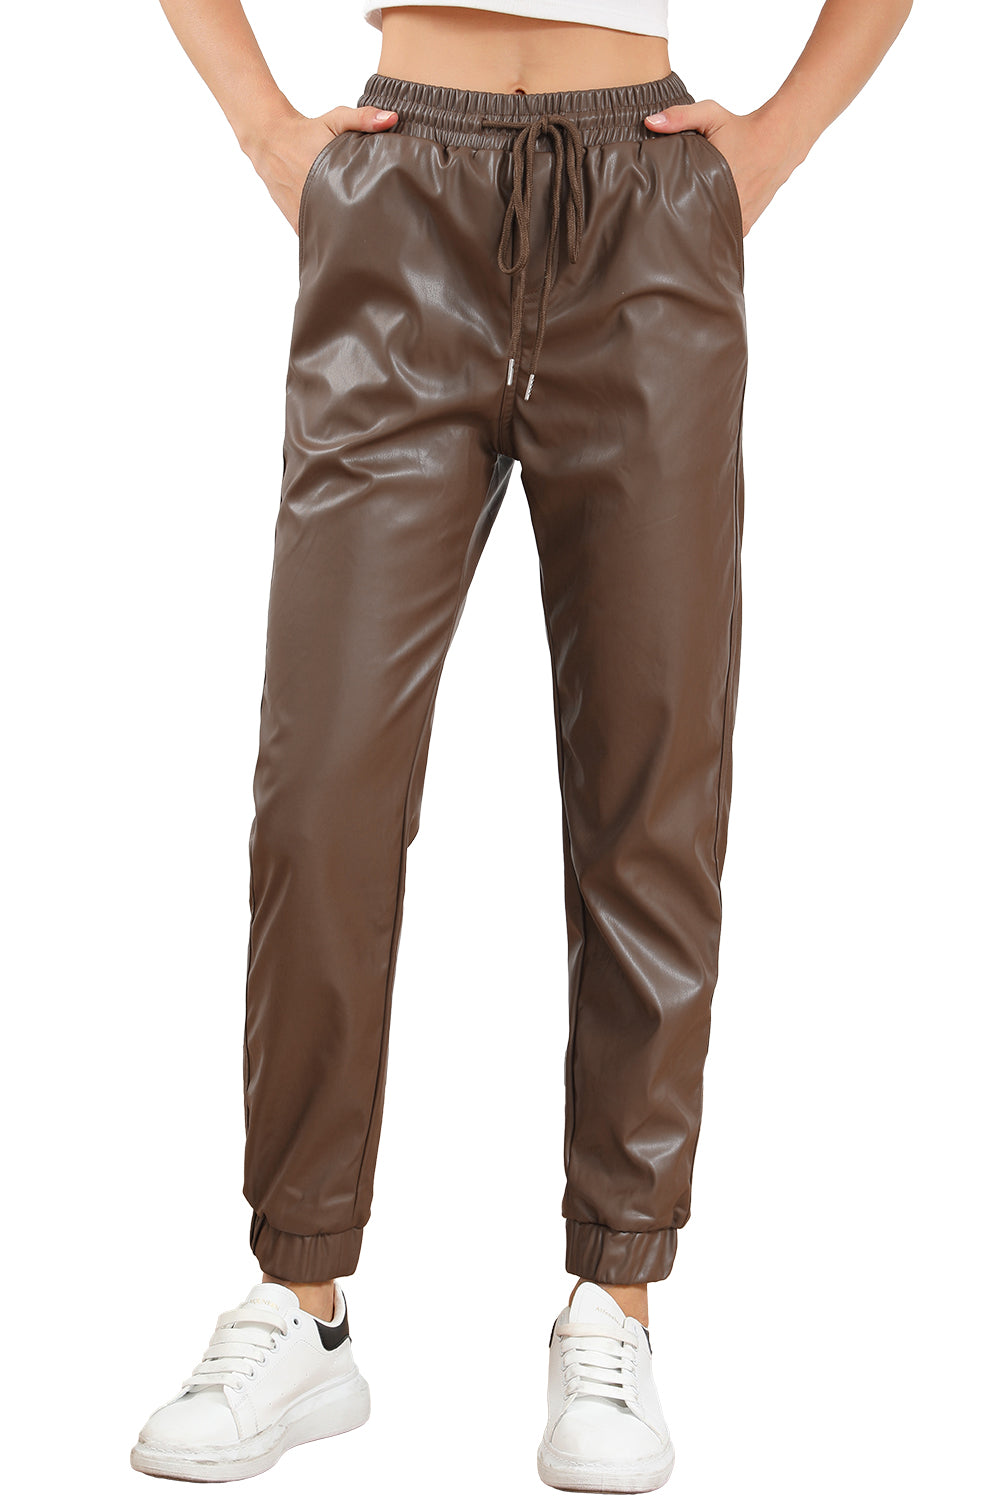 Brown Leather Tie Waist Jogger Womens Pants - US2EInc Apparel Plug Ltd. Co